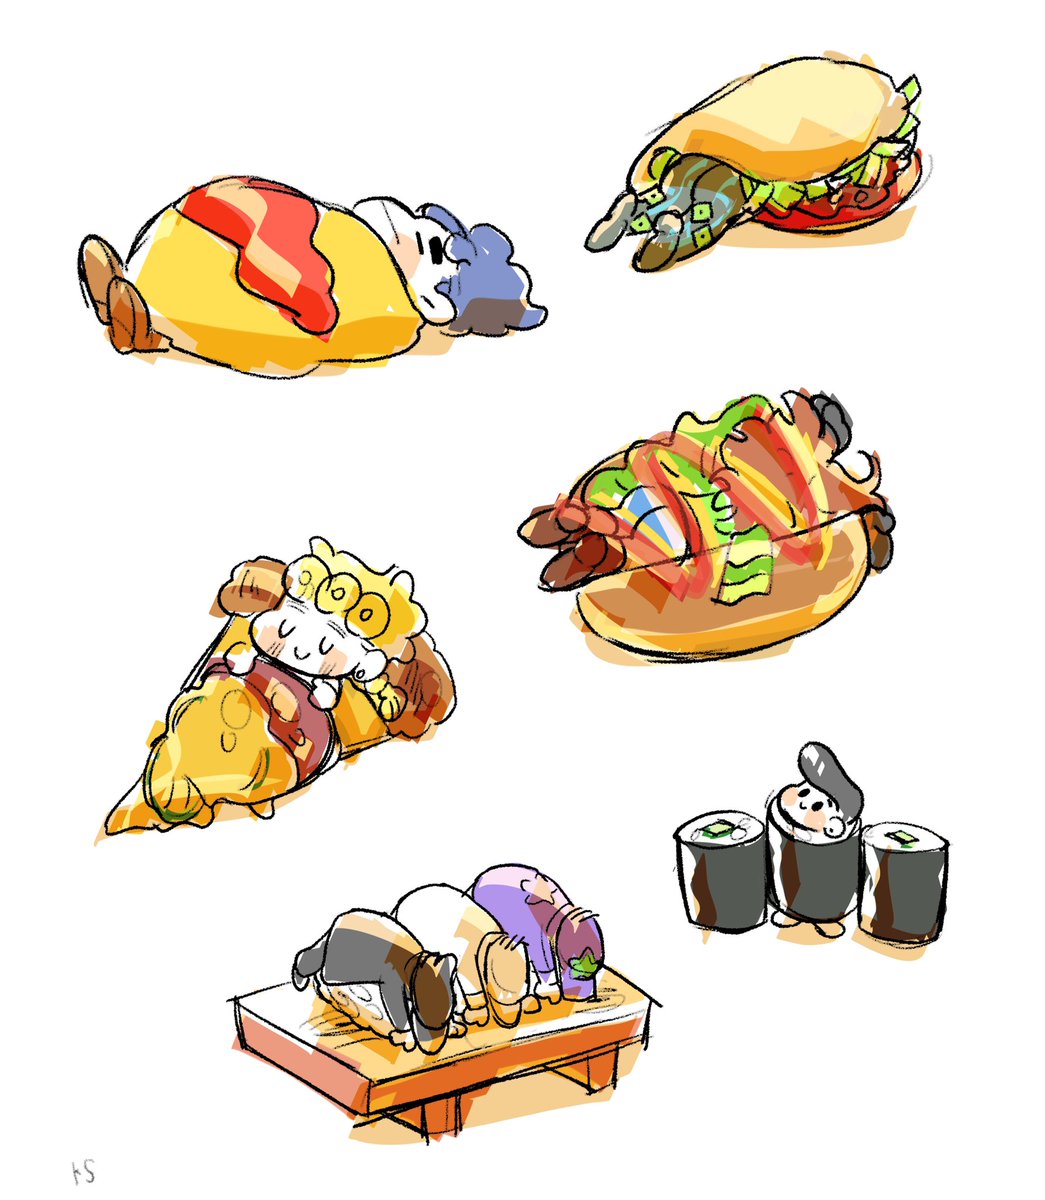 giorno giovanna food sushi blonde hair white background food focus sleeping multiple boys  illustration images